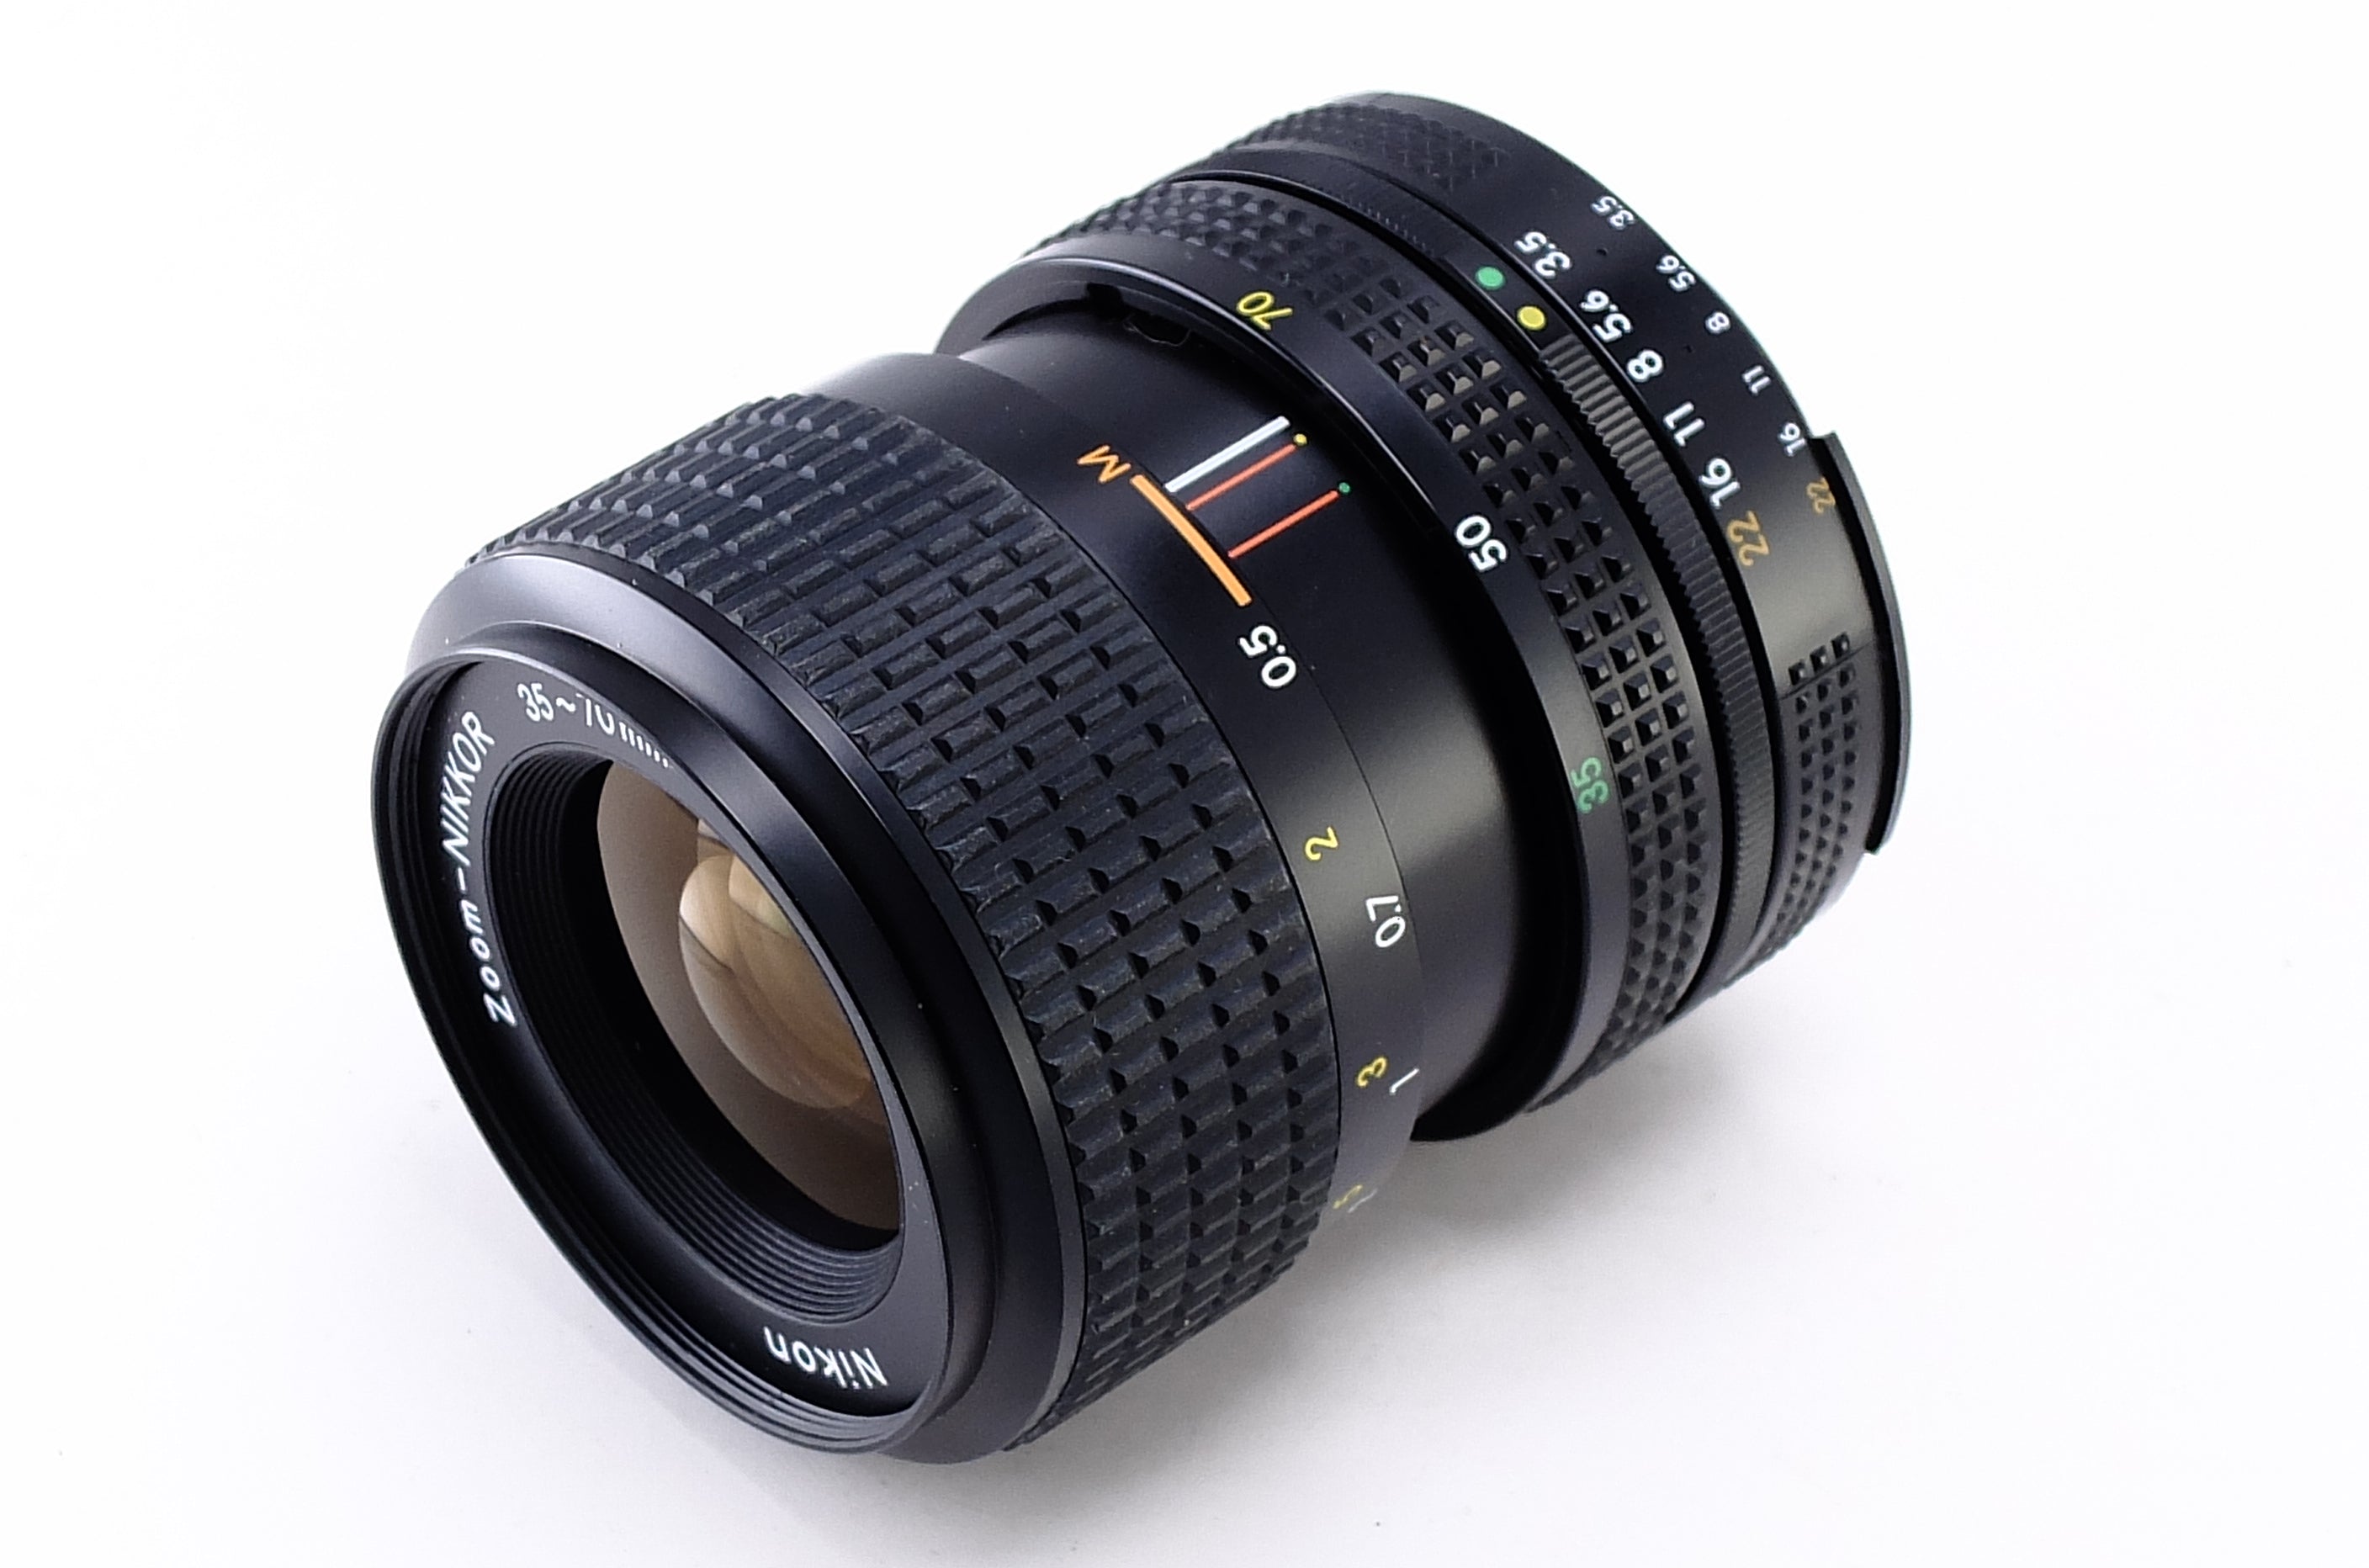 Nikon】FM10 + Zoom 35-70mm F3.5~4.8 [1132716122134] – 東京CAMERA